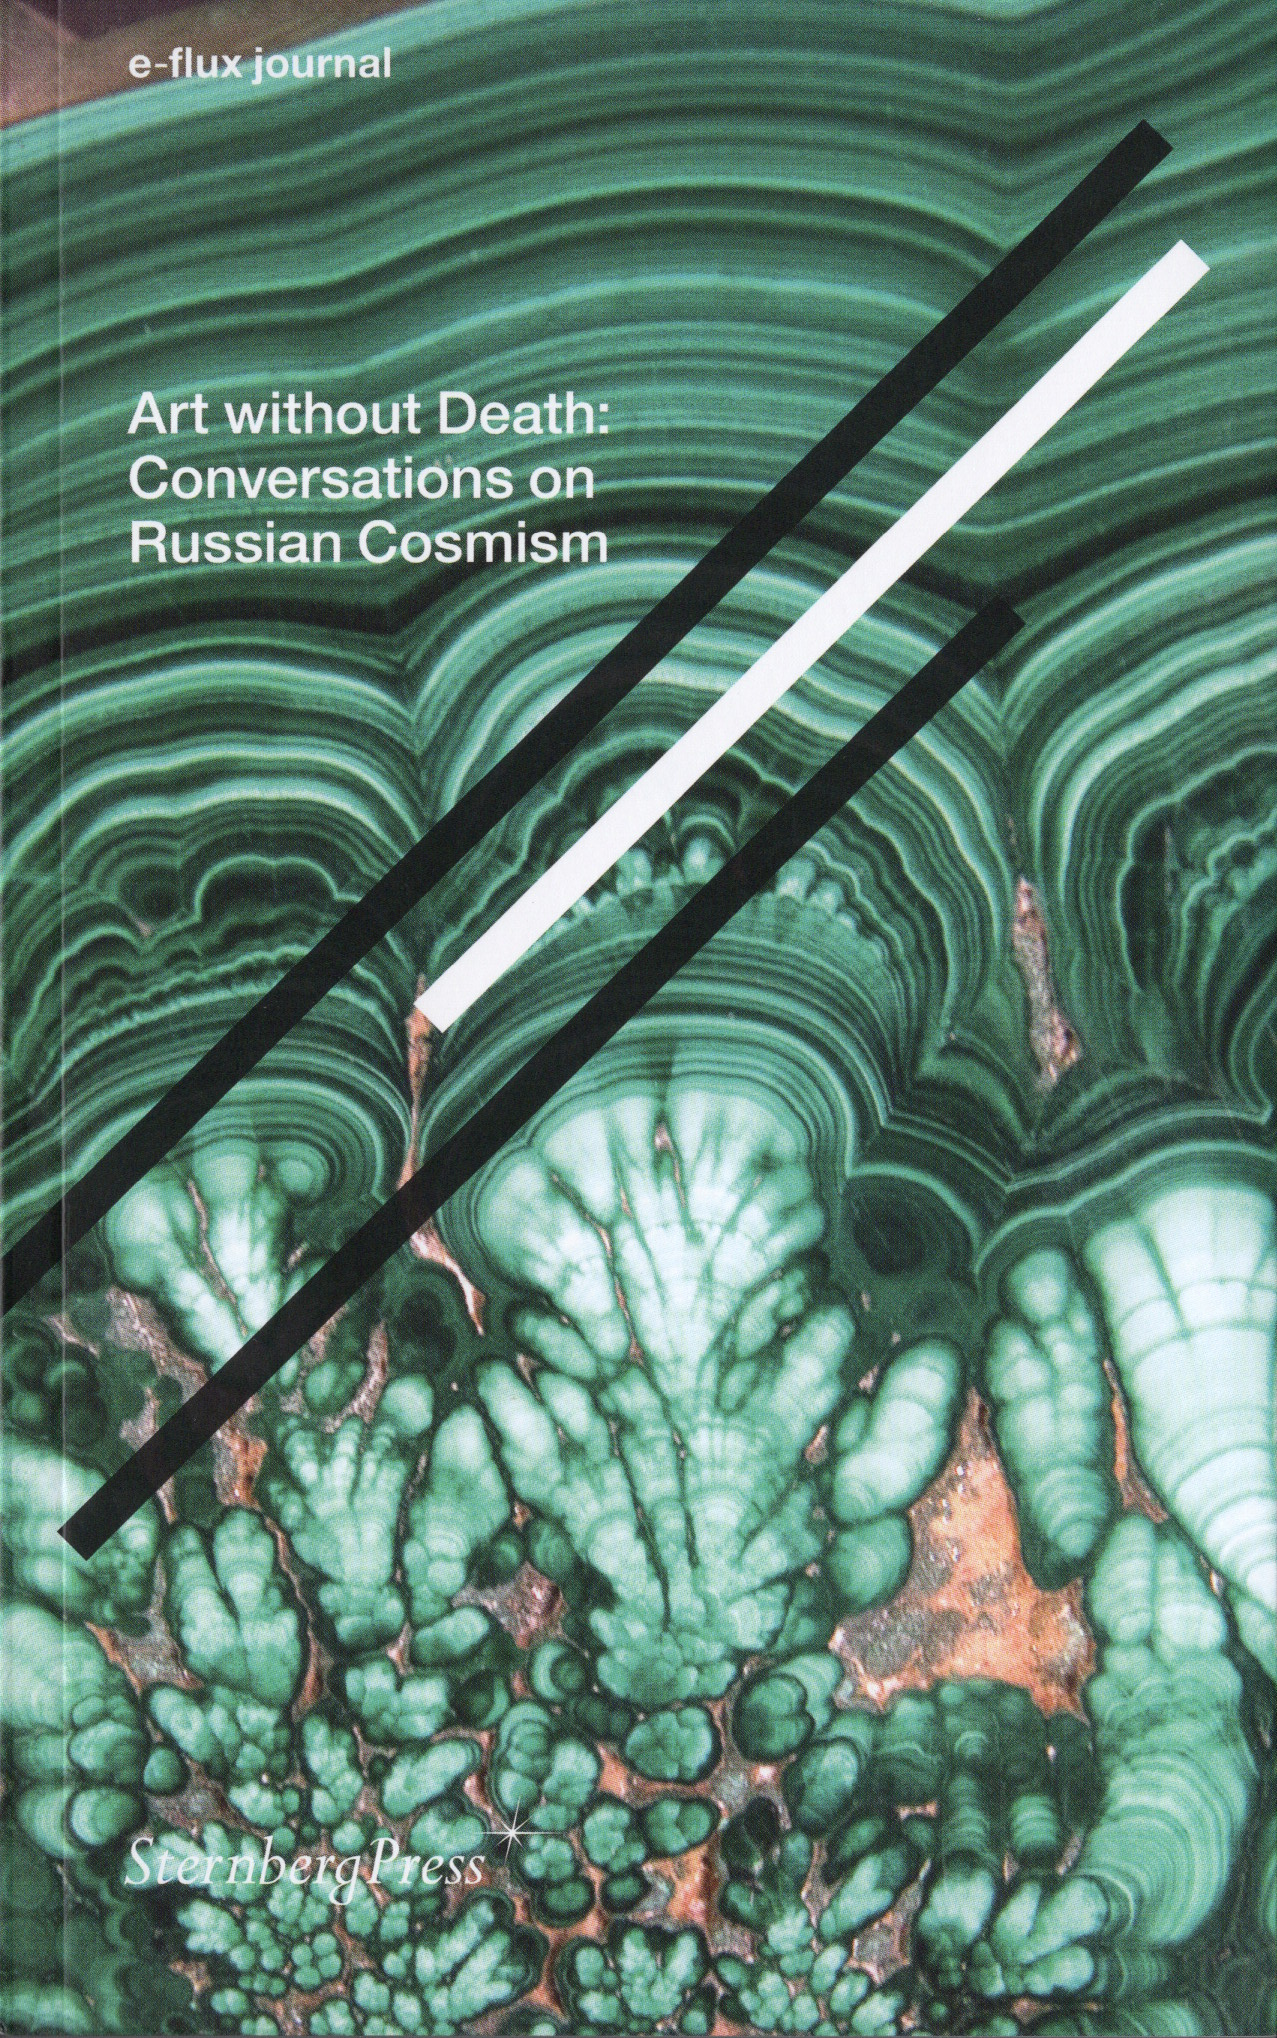 Art without Death, E-Flux Journal